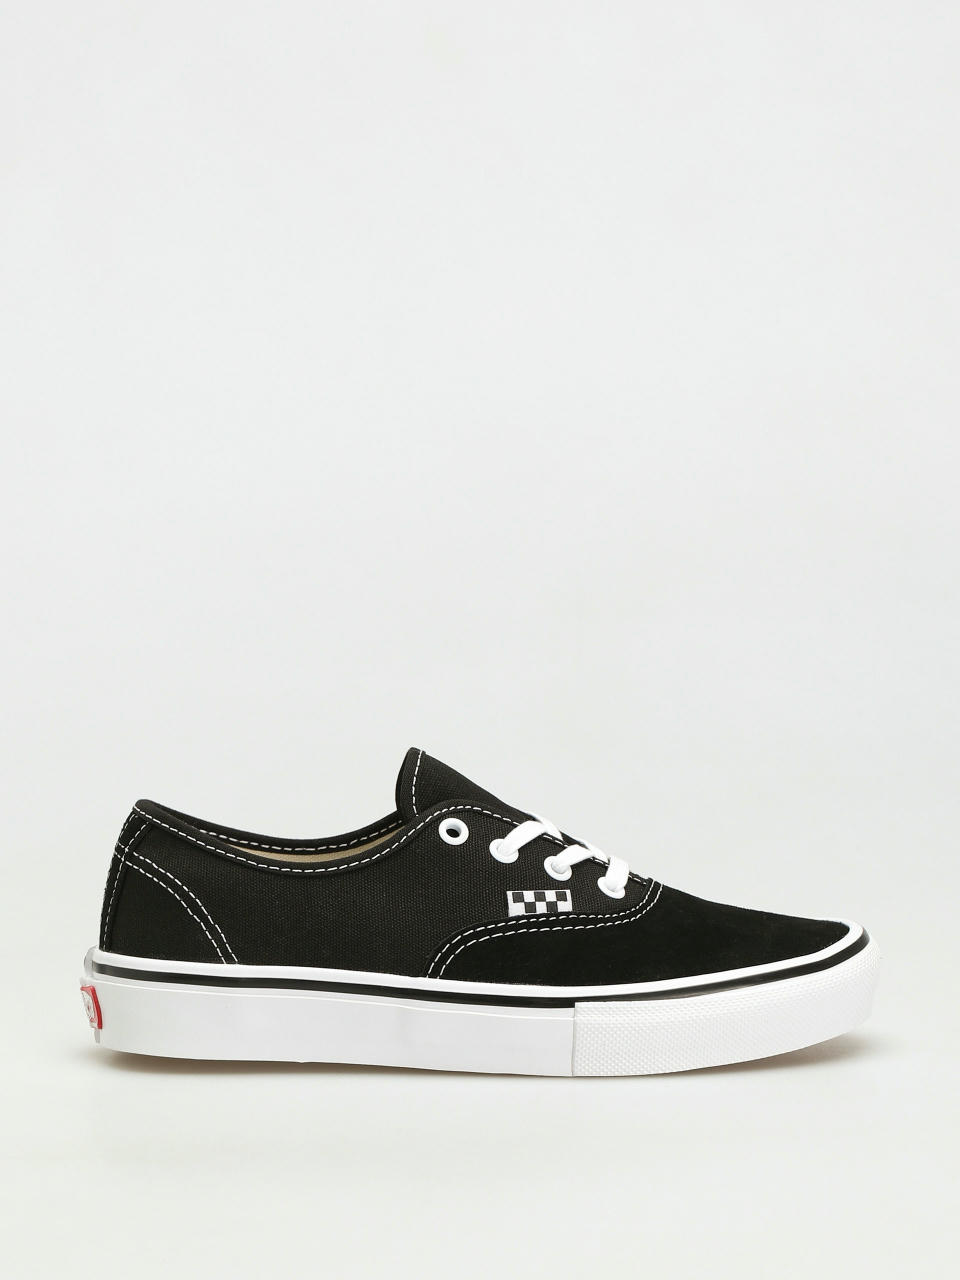 Topánky Vans Skate Authentic (black/white)